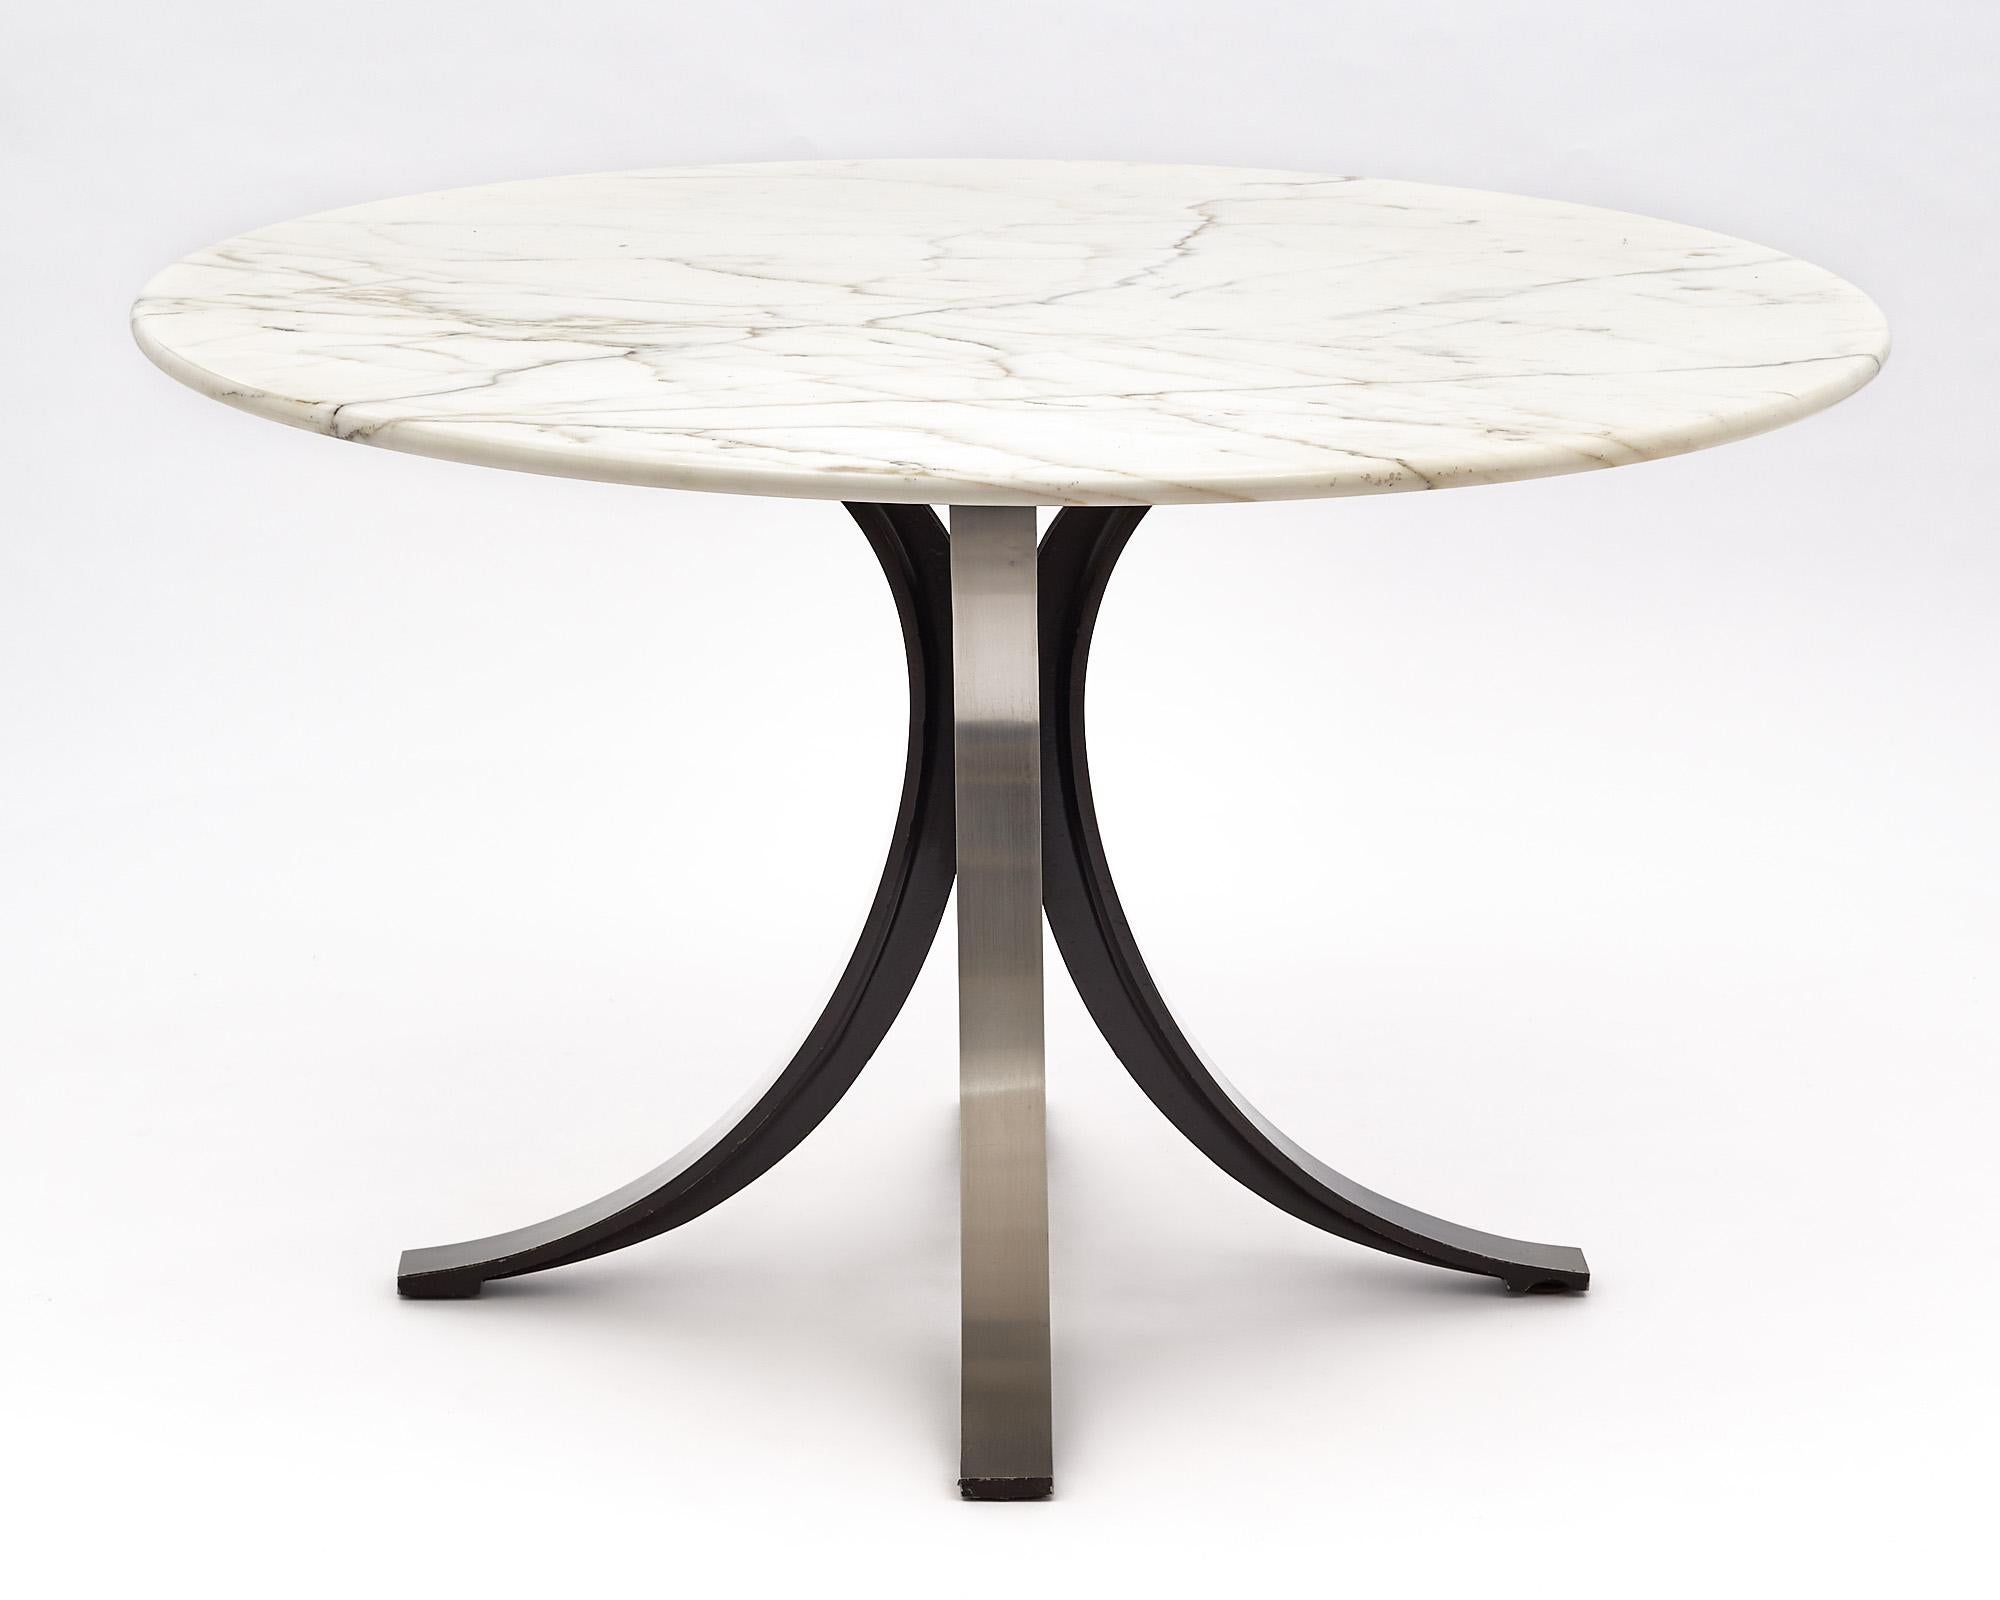 Table, Italian, designed by Osvaldo Borsani for Tecno. Carrara marble top with stylized steel base.